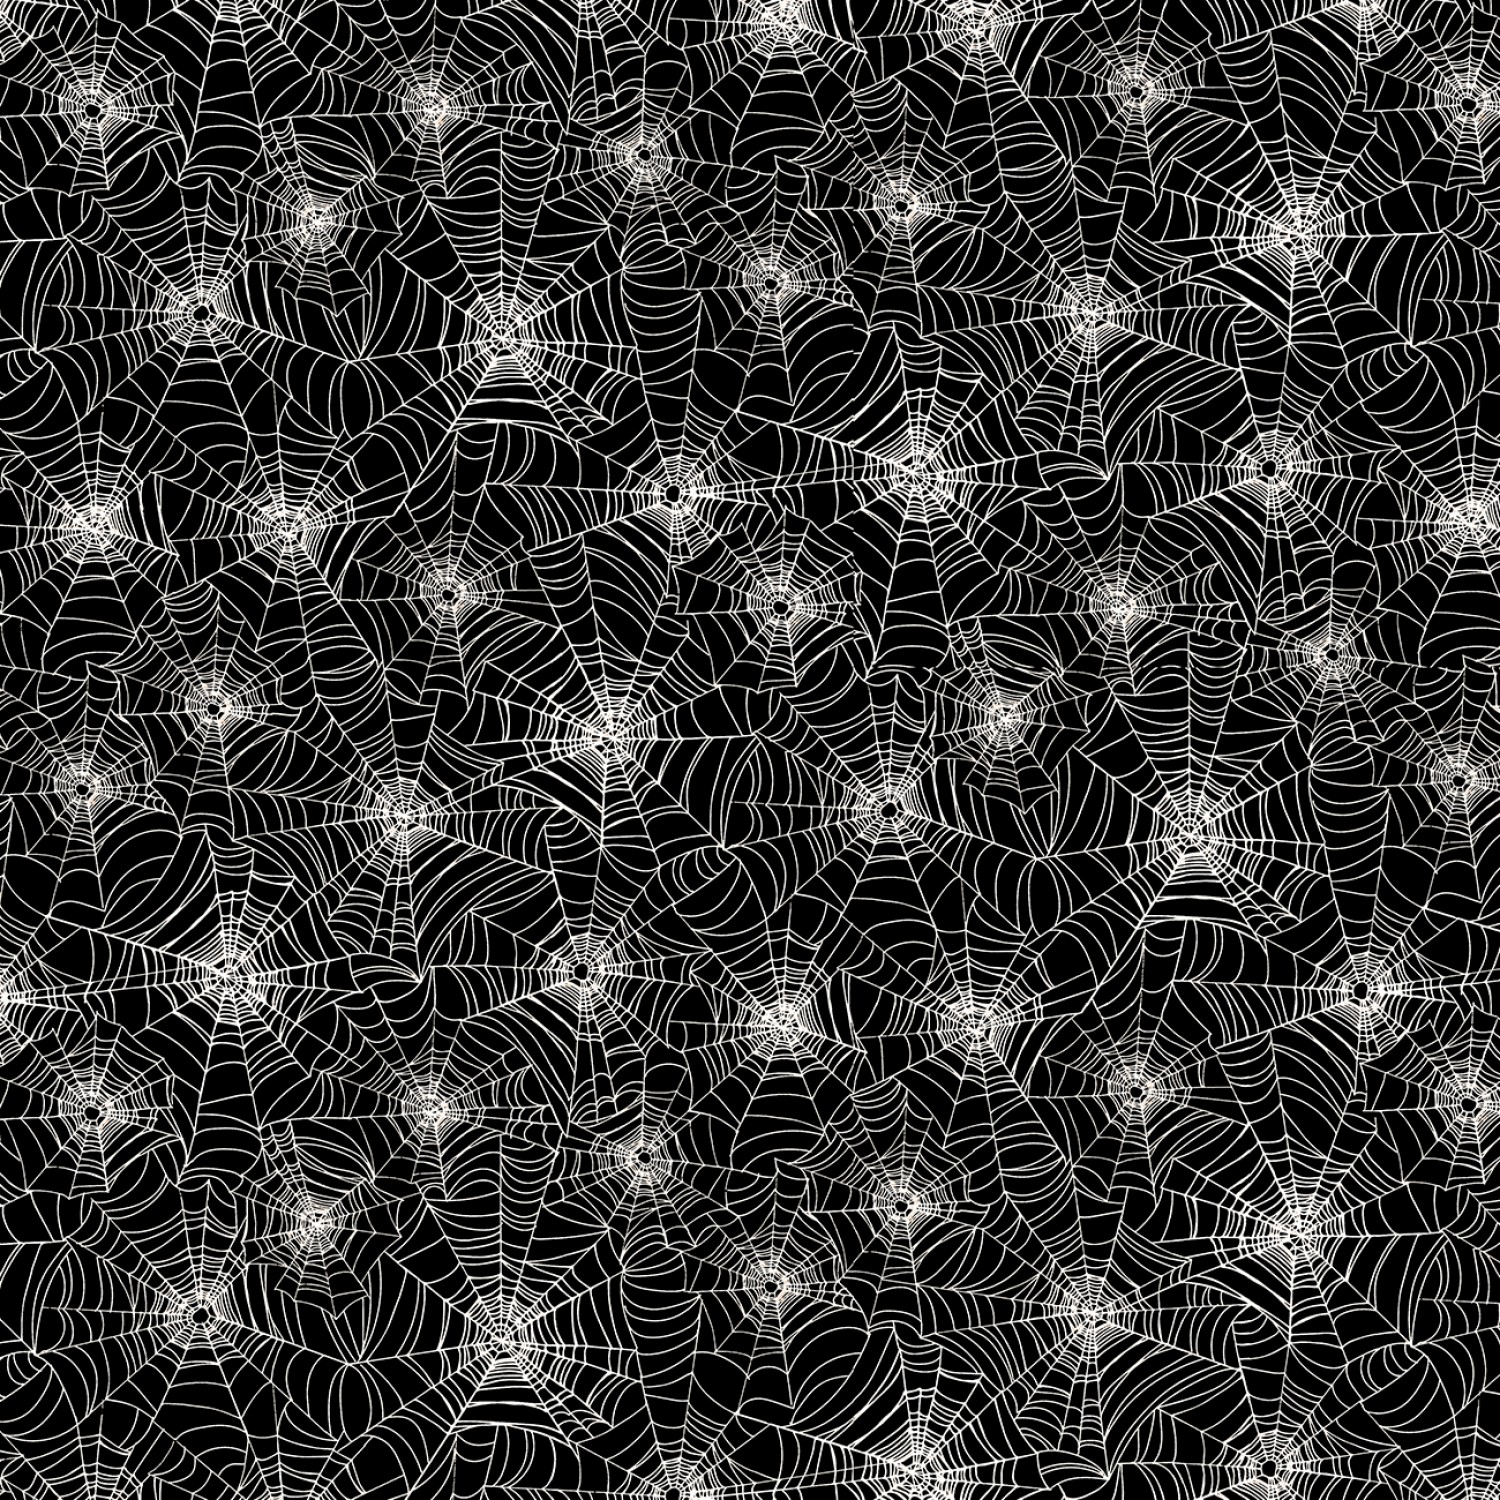 Black Spider Webs Glow in the Dark Fabric